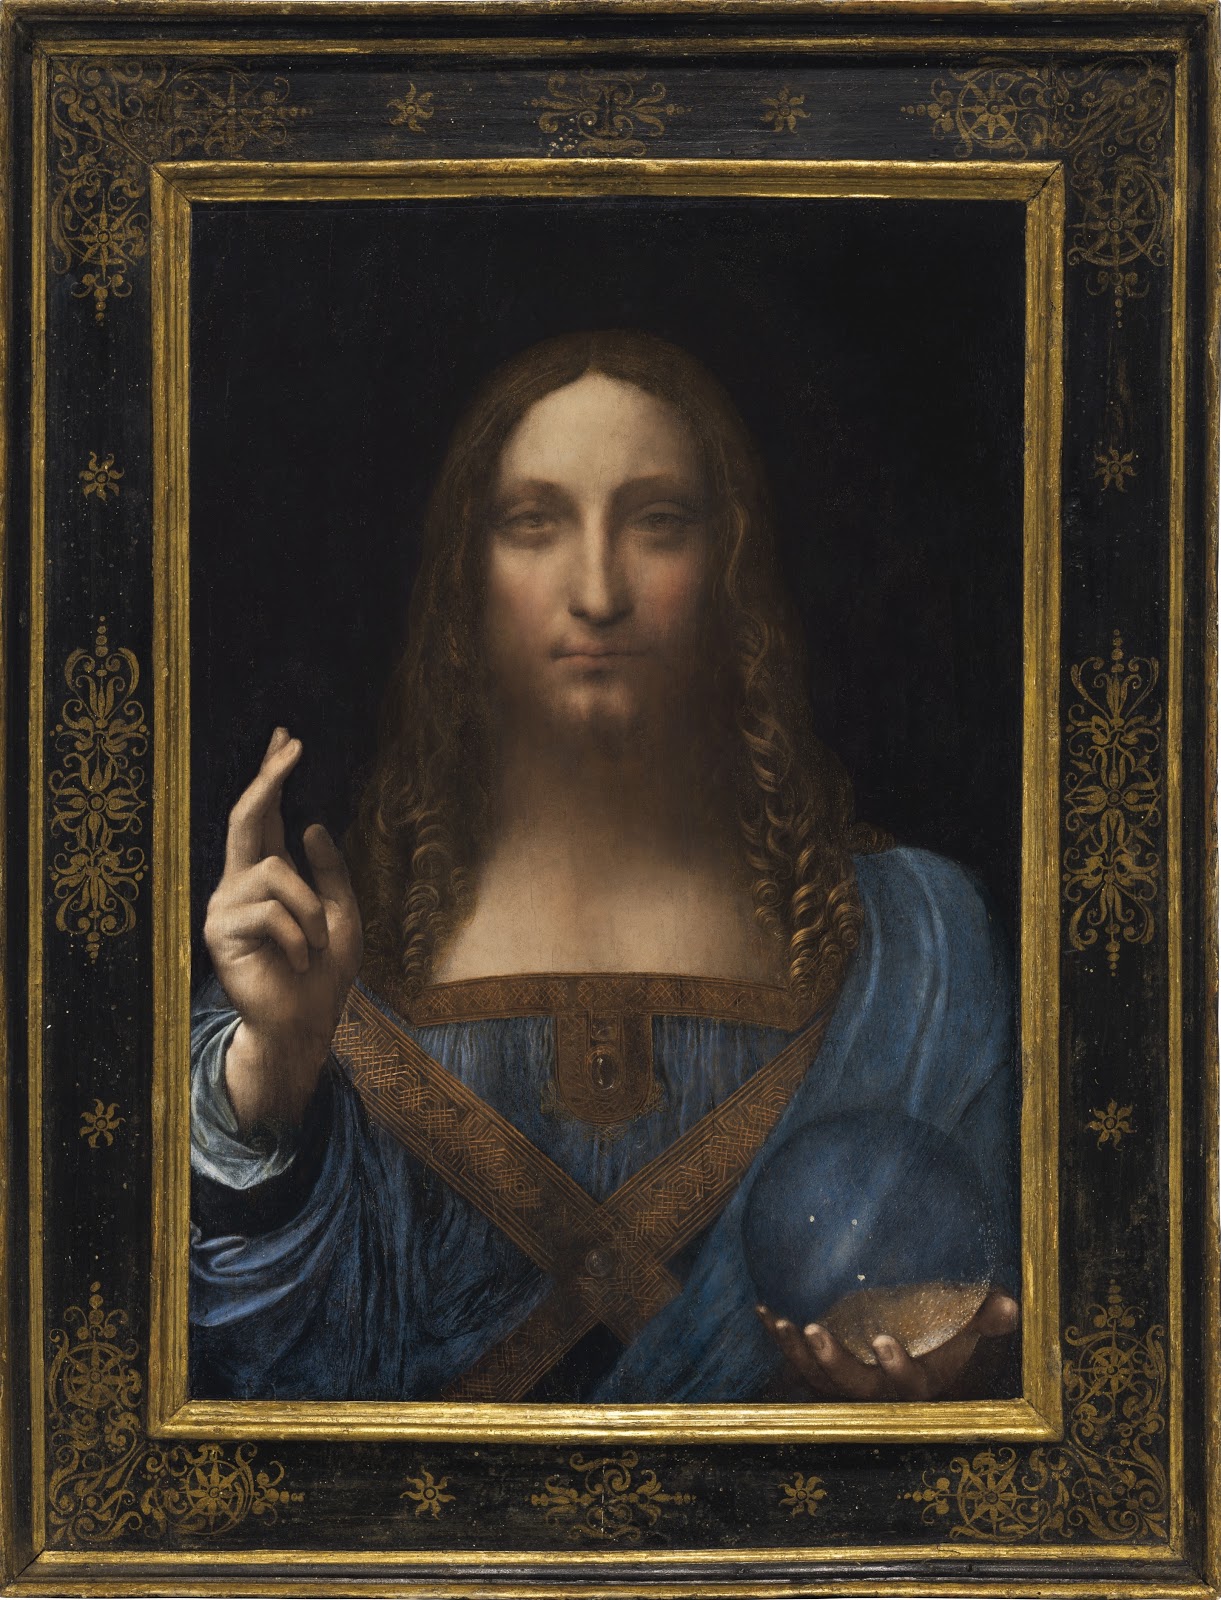 Leonardo+da+Vinci-1452-1519 (870).jpg